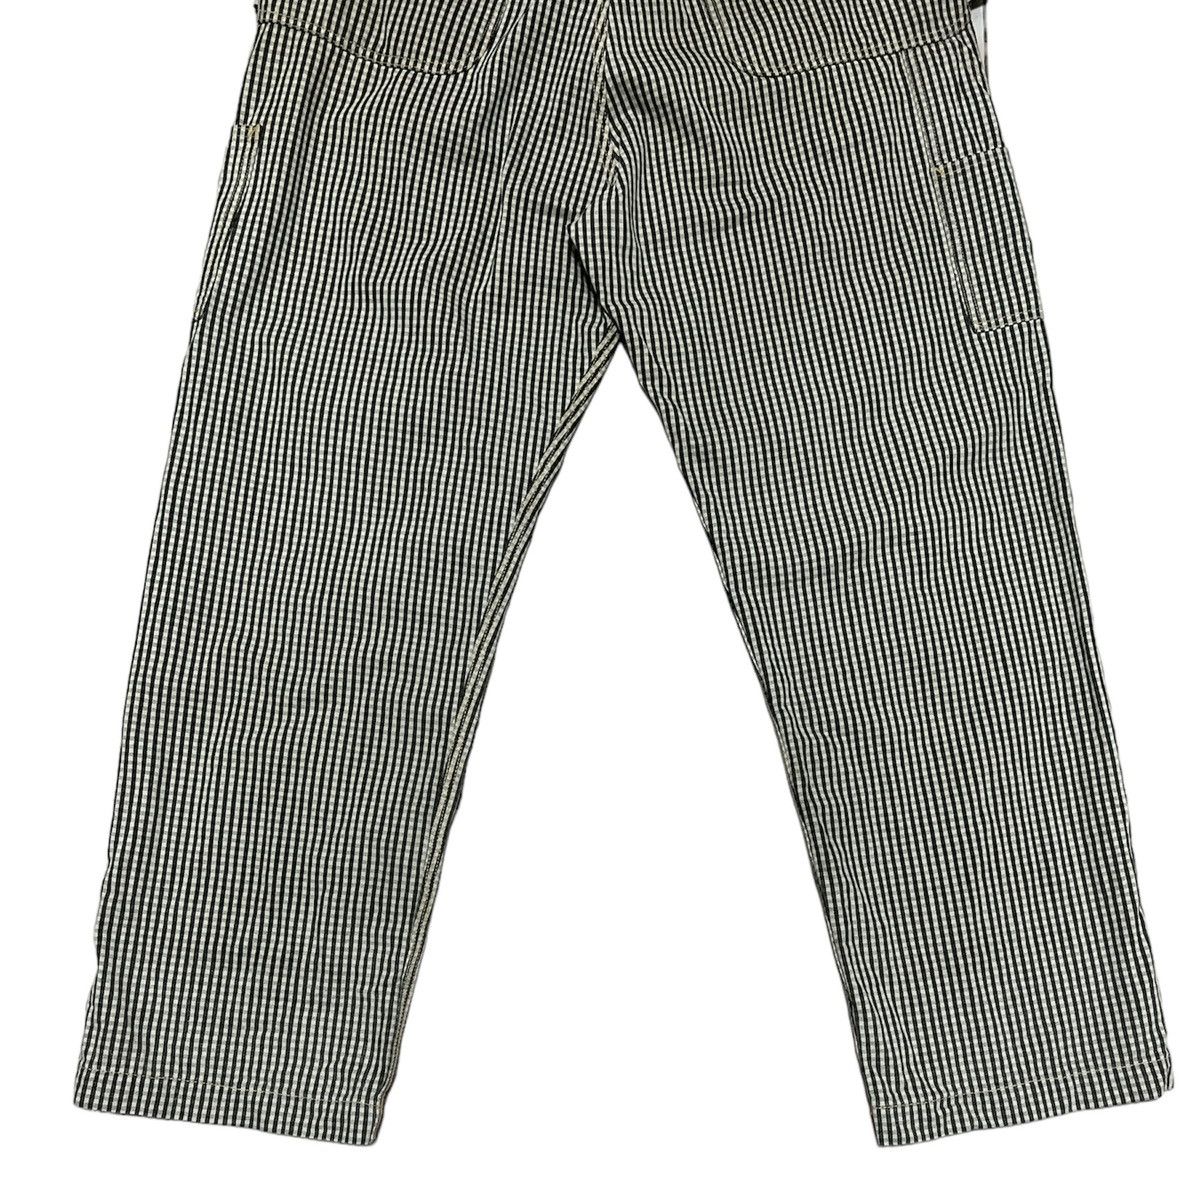 Kapital hickory stripe double knee carpenter pants - 11